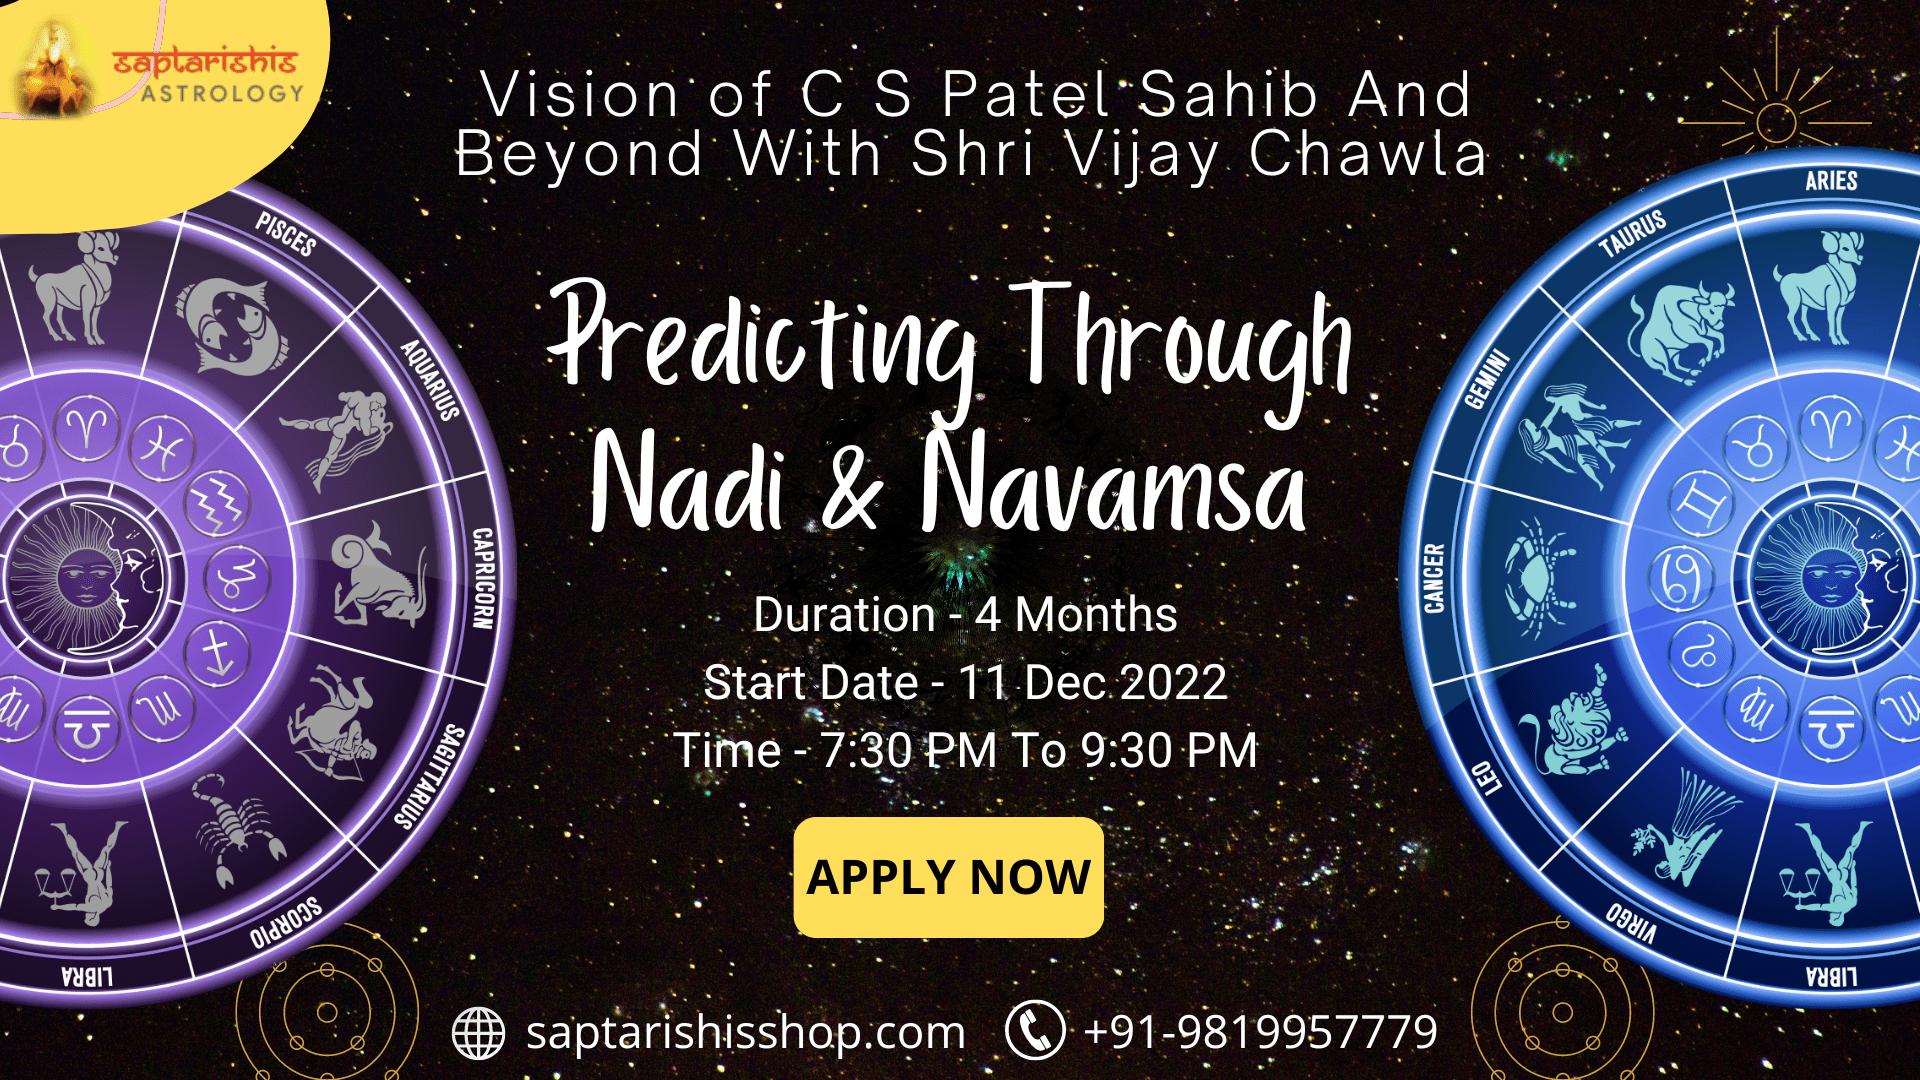 Learn Astrology Predicting Through Nadi & Navamsa by C S Patel